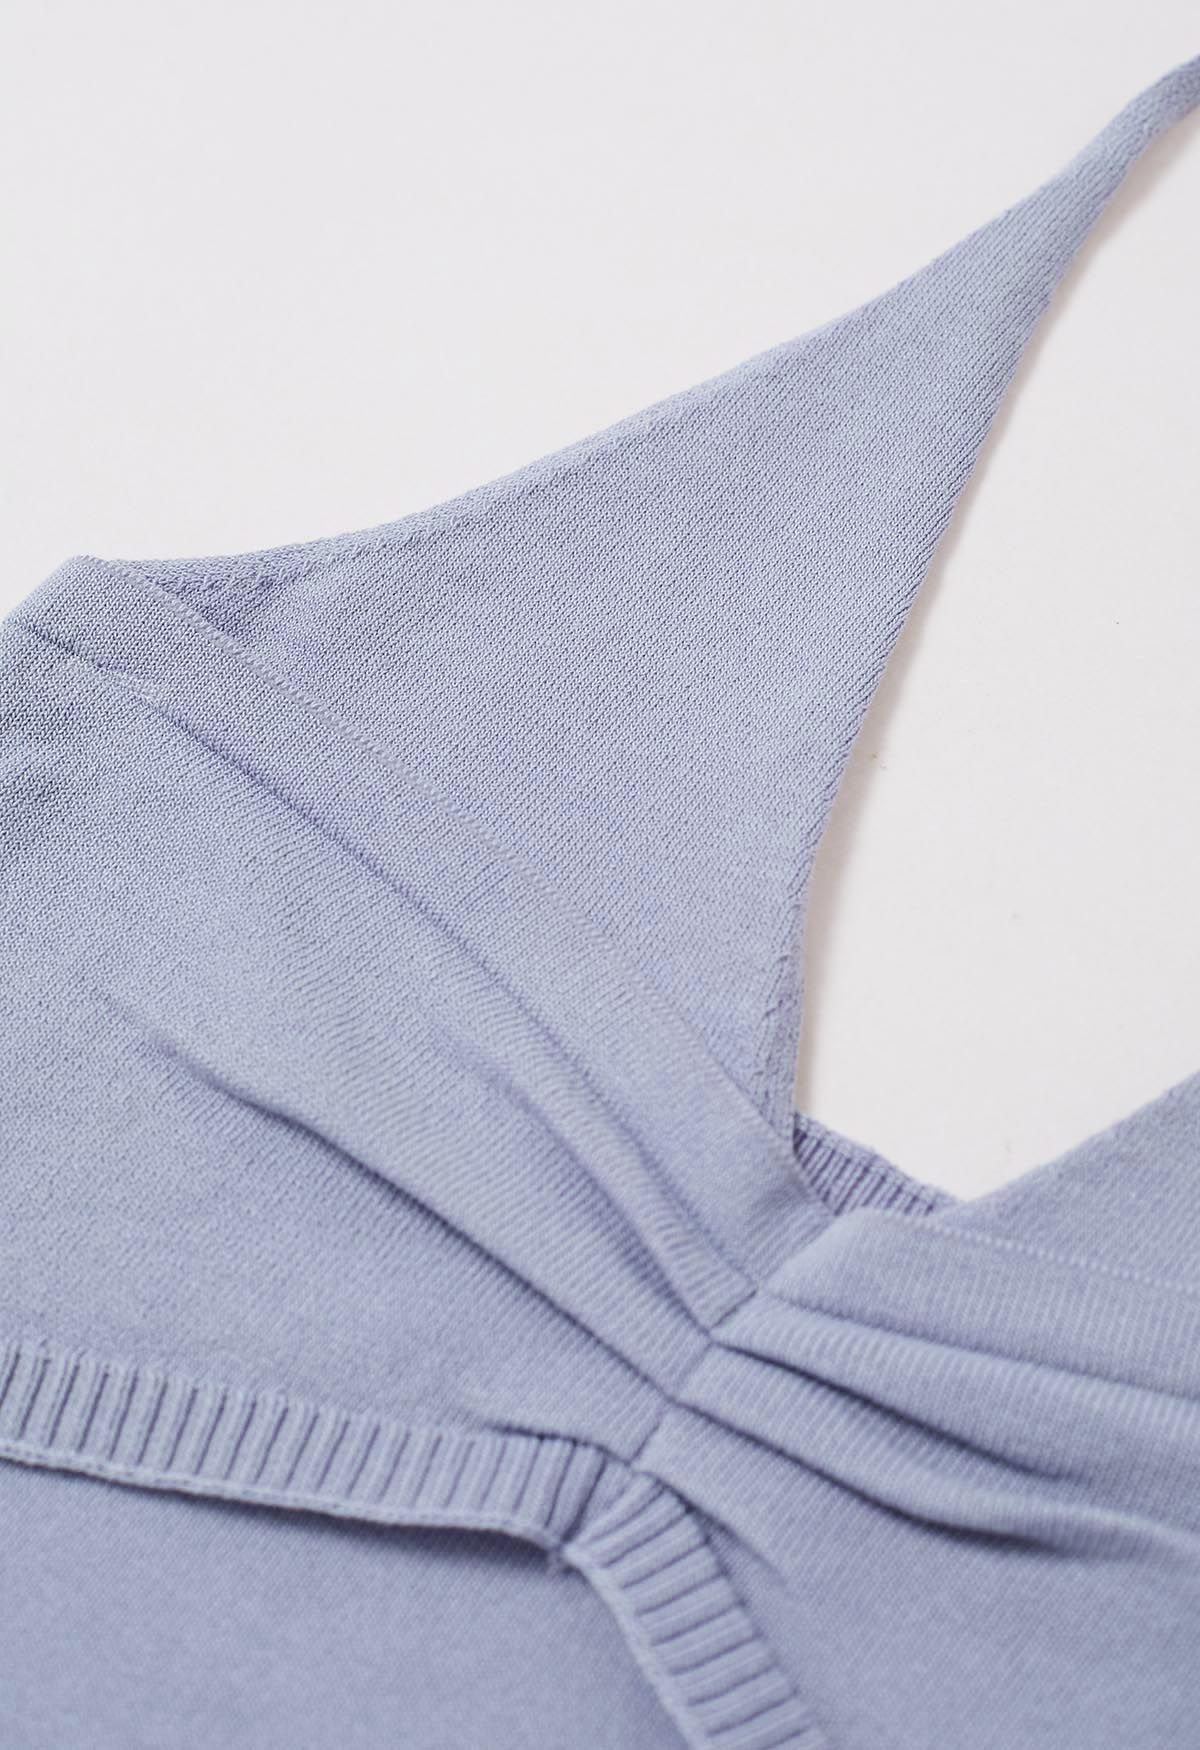 Pintuck Detail Halter Knit Top in Lavender